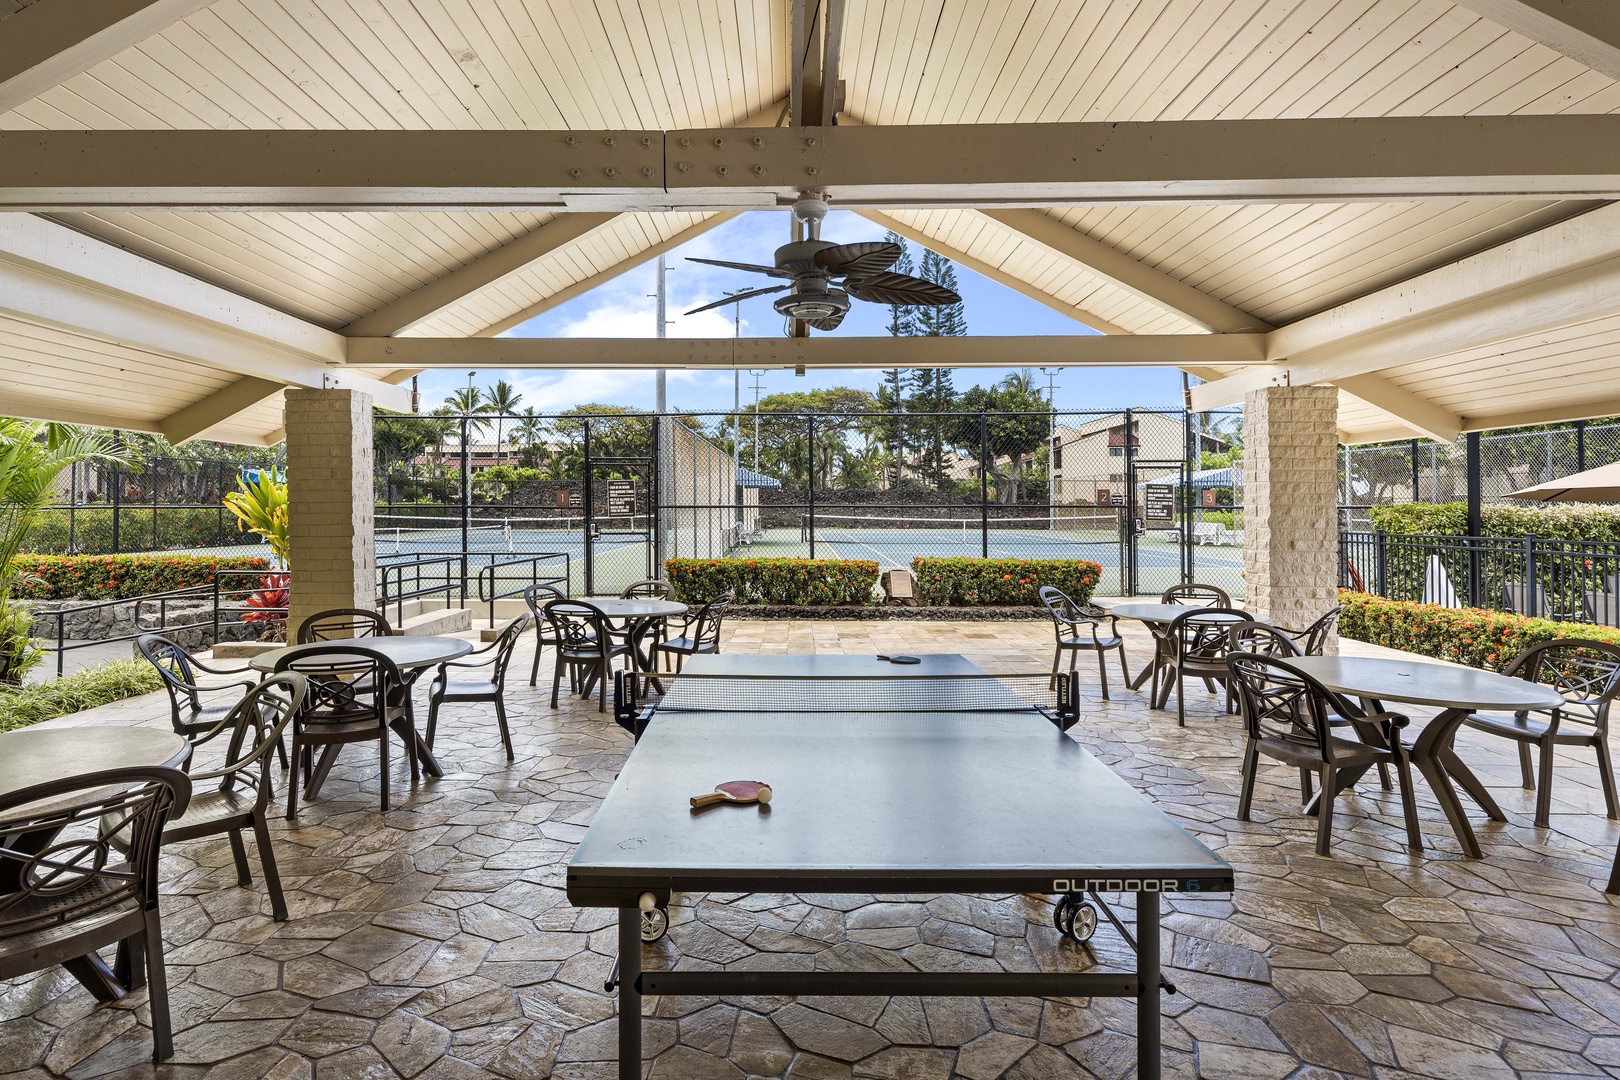 Kailua Kona Vacation Rentals, Keauhou Kona Surf & Racquet 2101 - Condo community area with a table tennis table